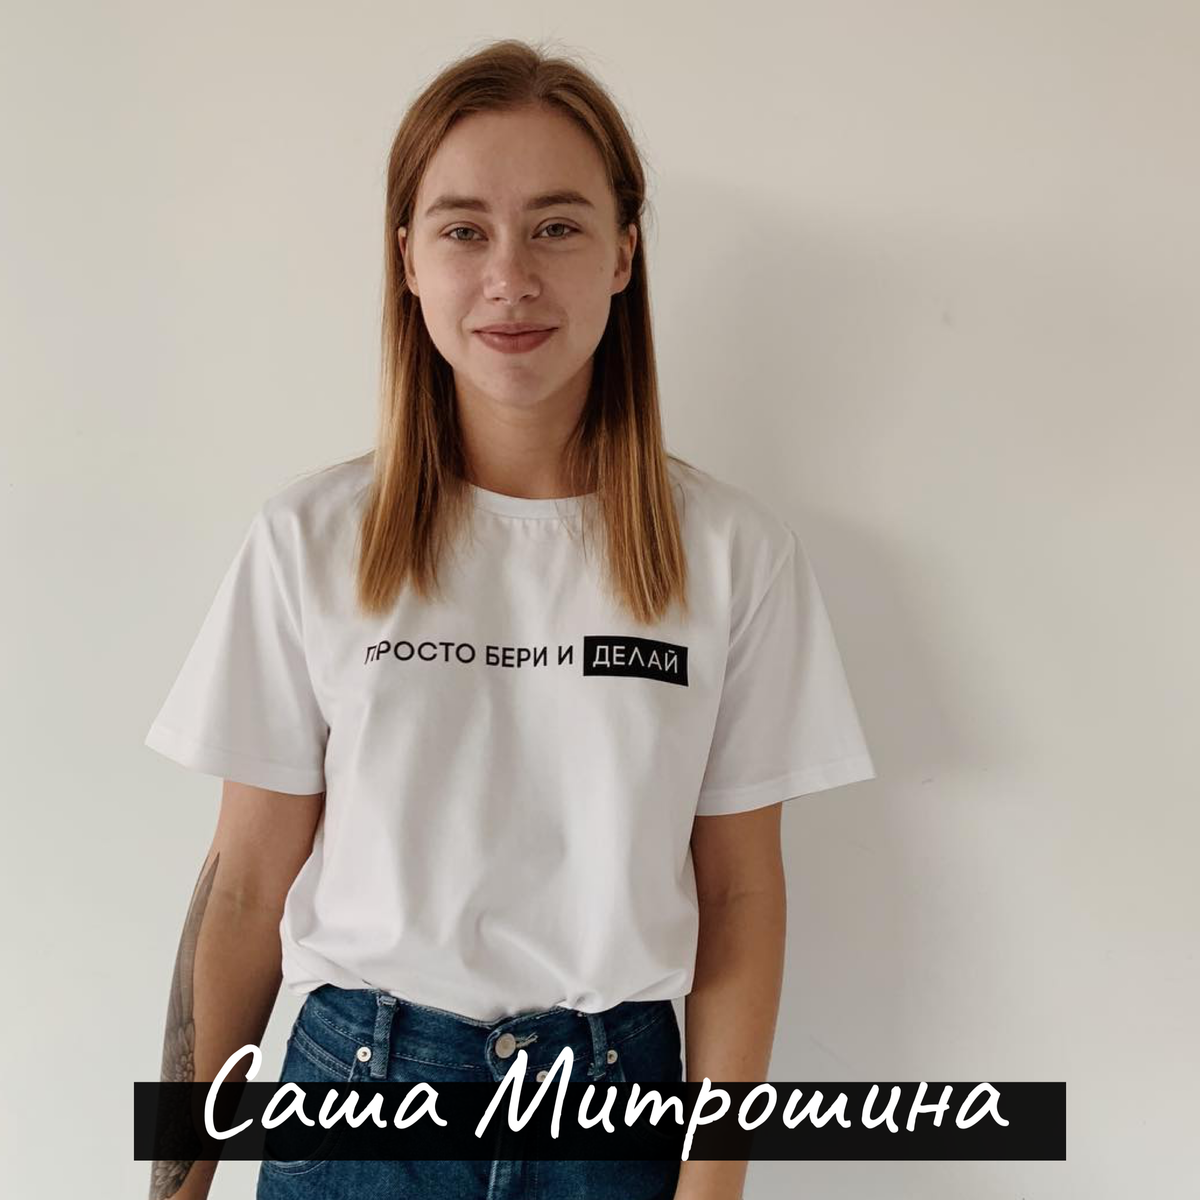 Александра митрошина. биография. флешмоб “я не хотела умирать”, ее книга и блог